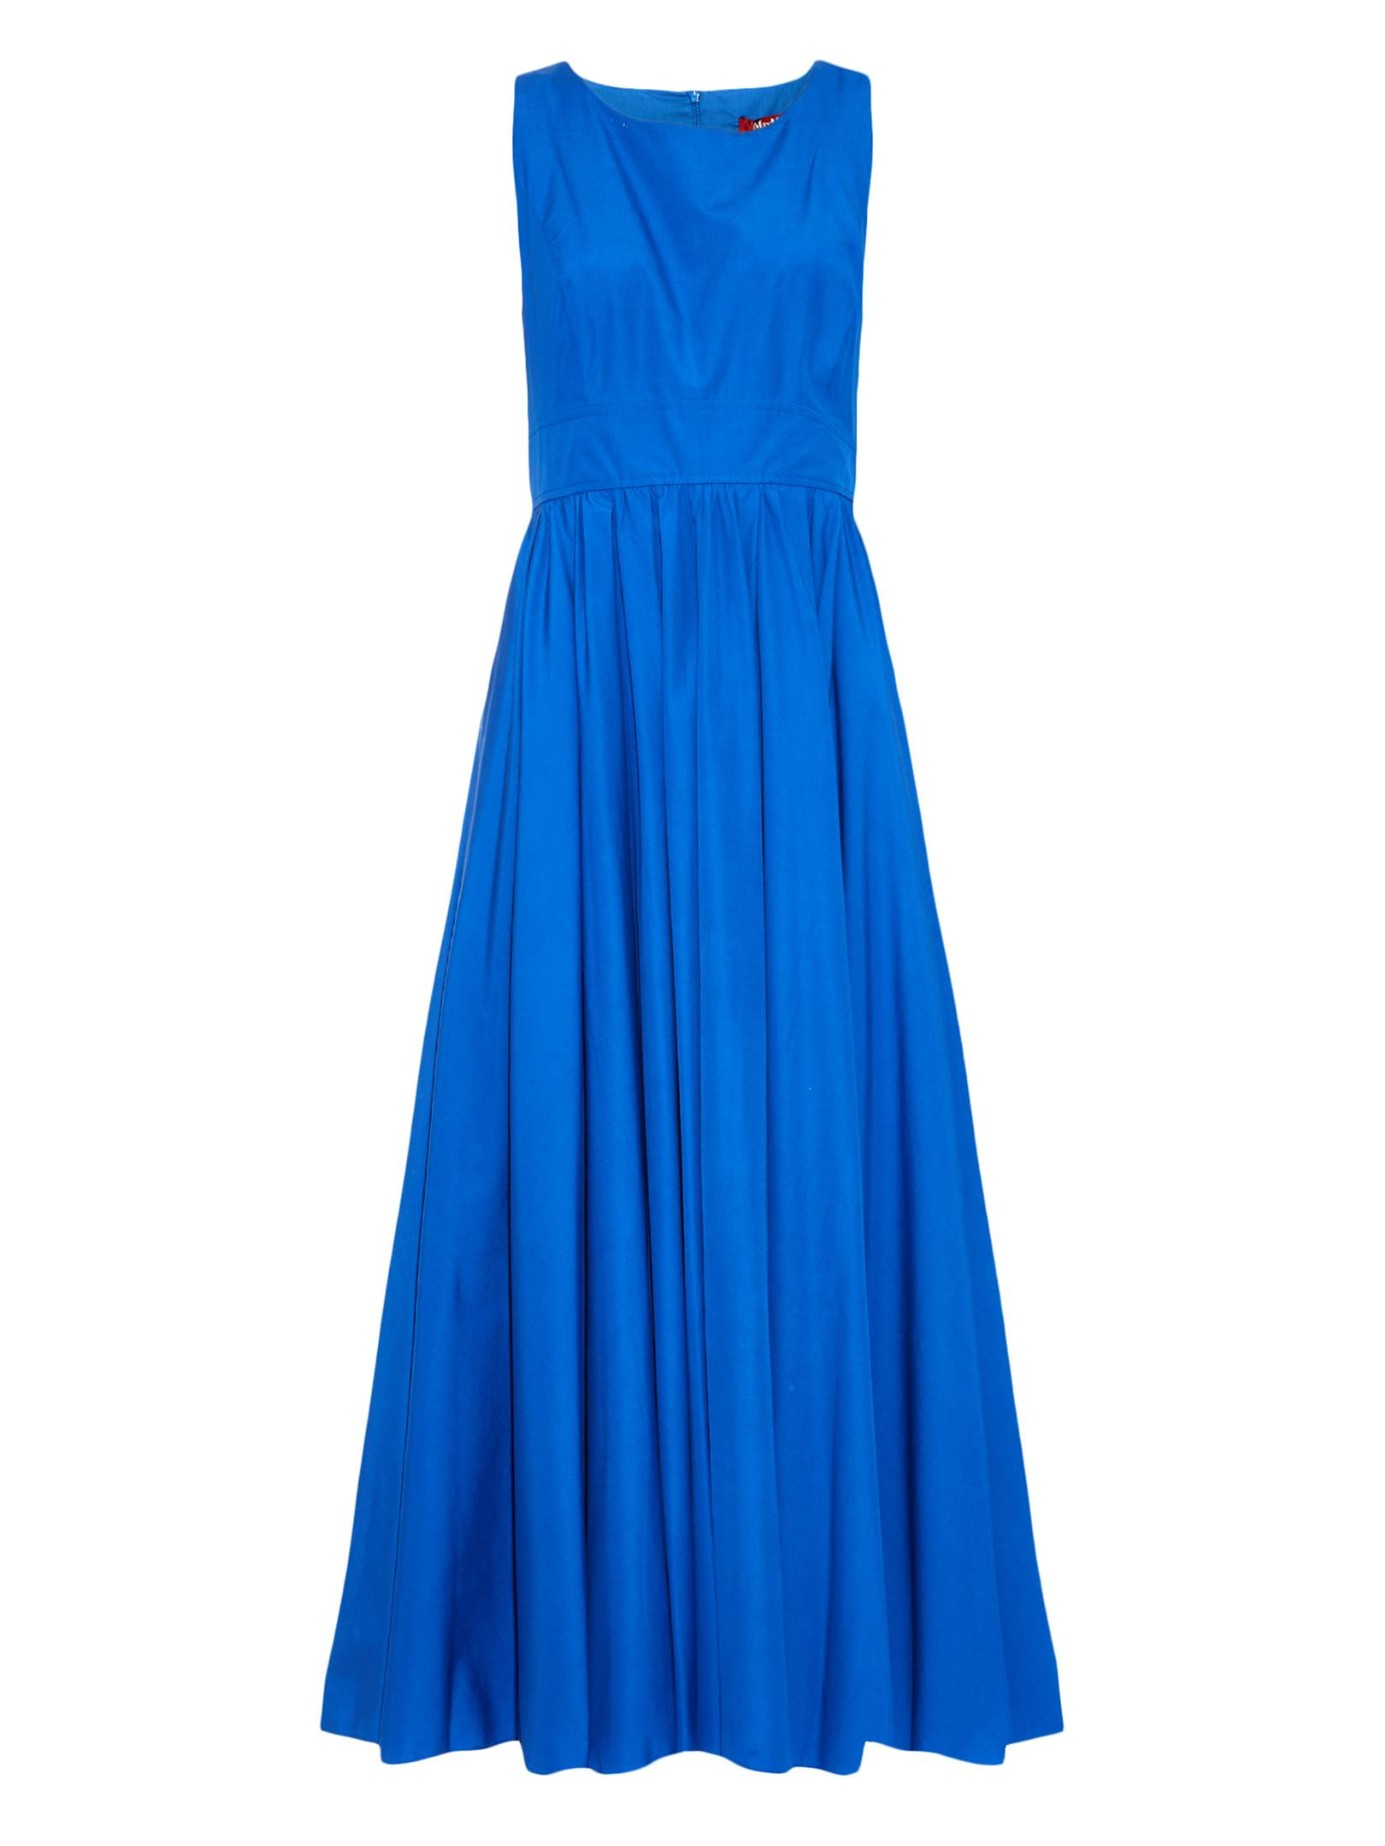 Lyst - Max Mara Studio Eccelso Dress in Blue